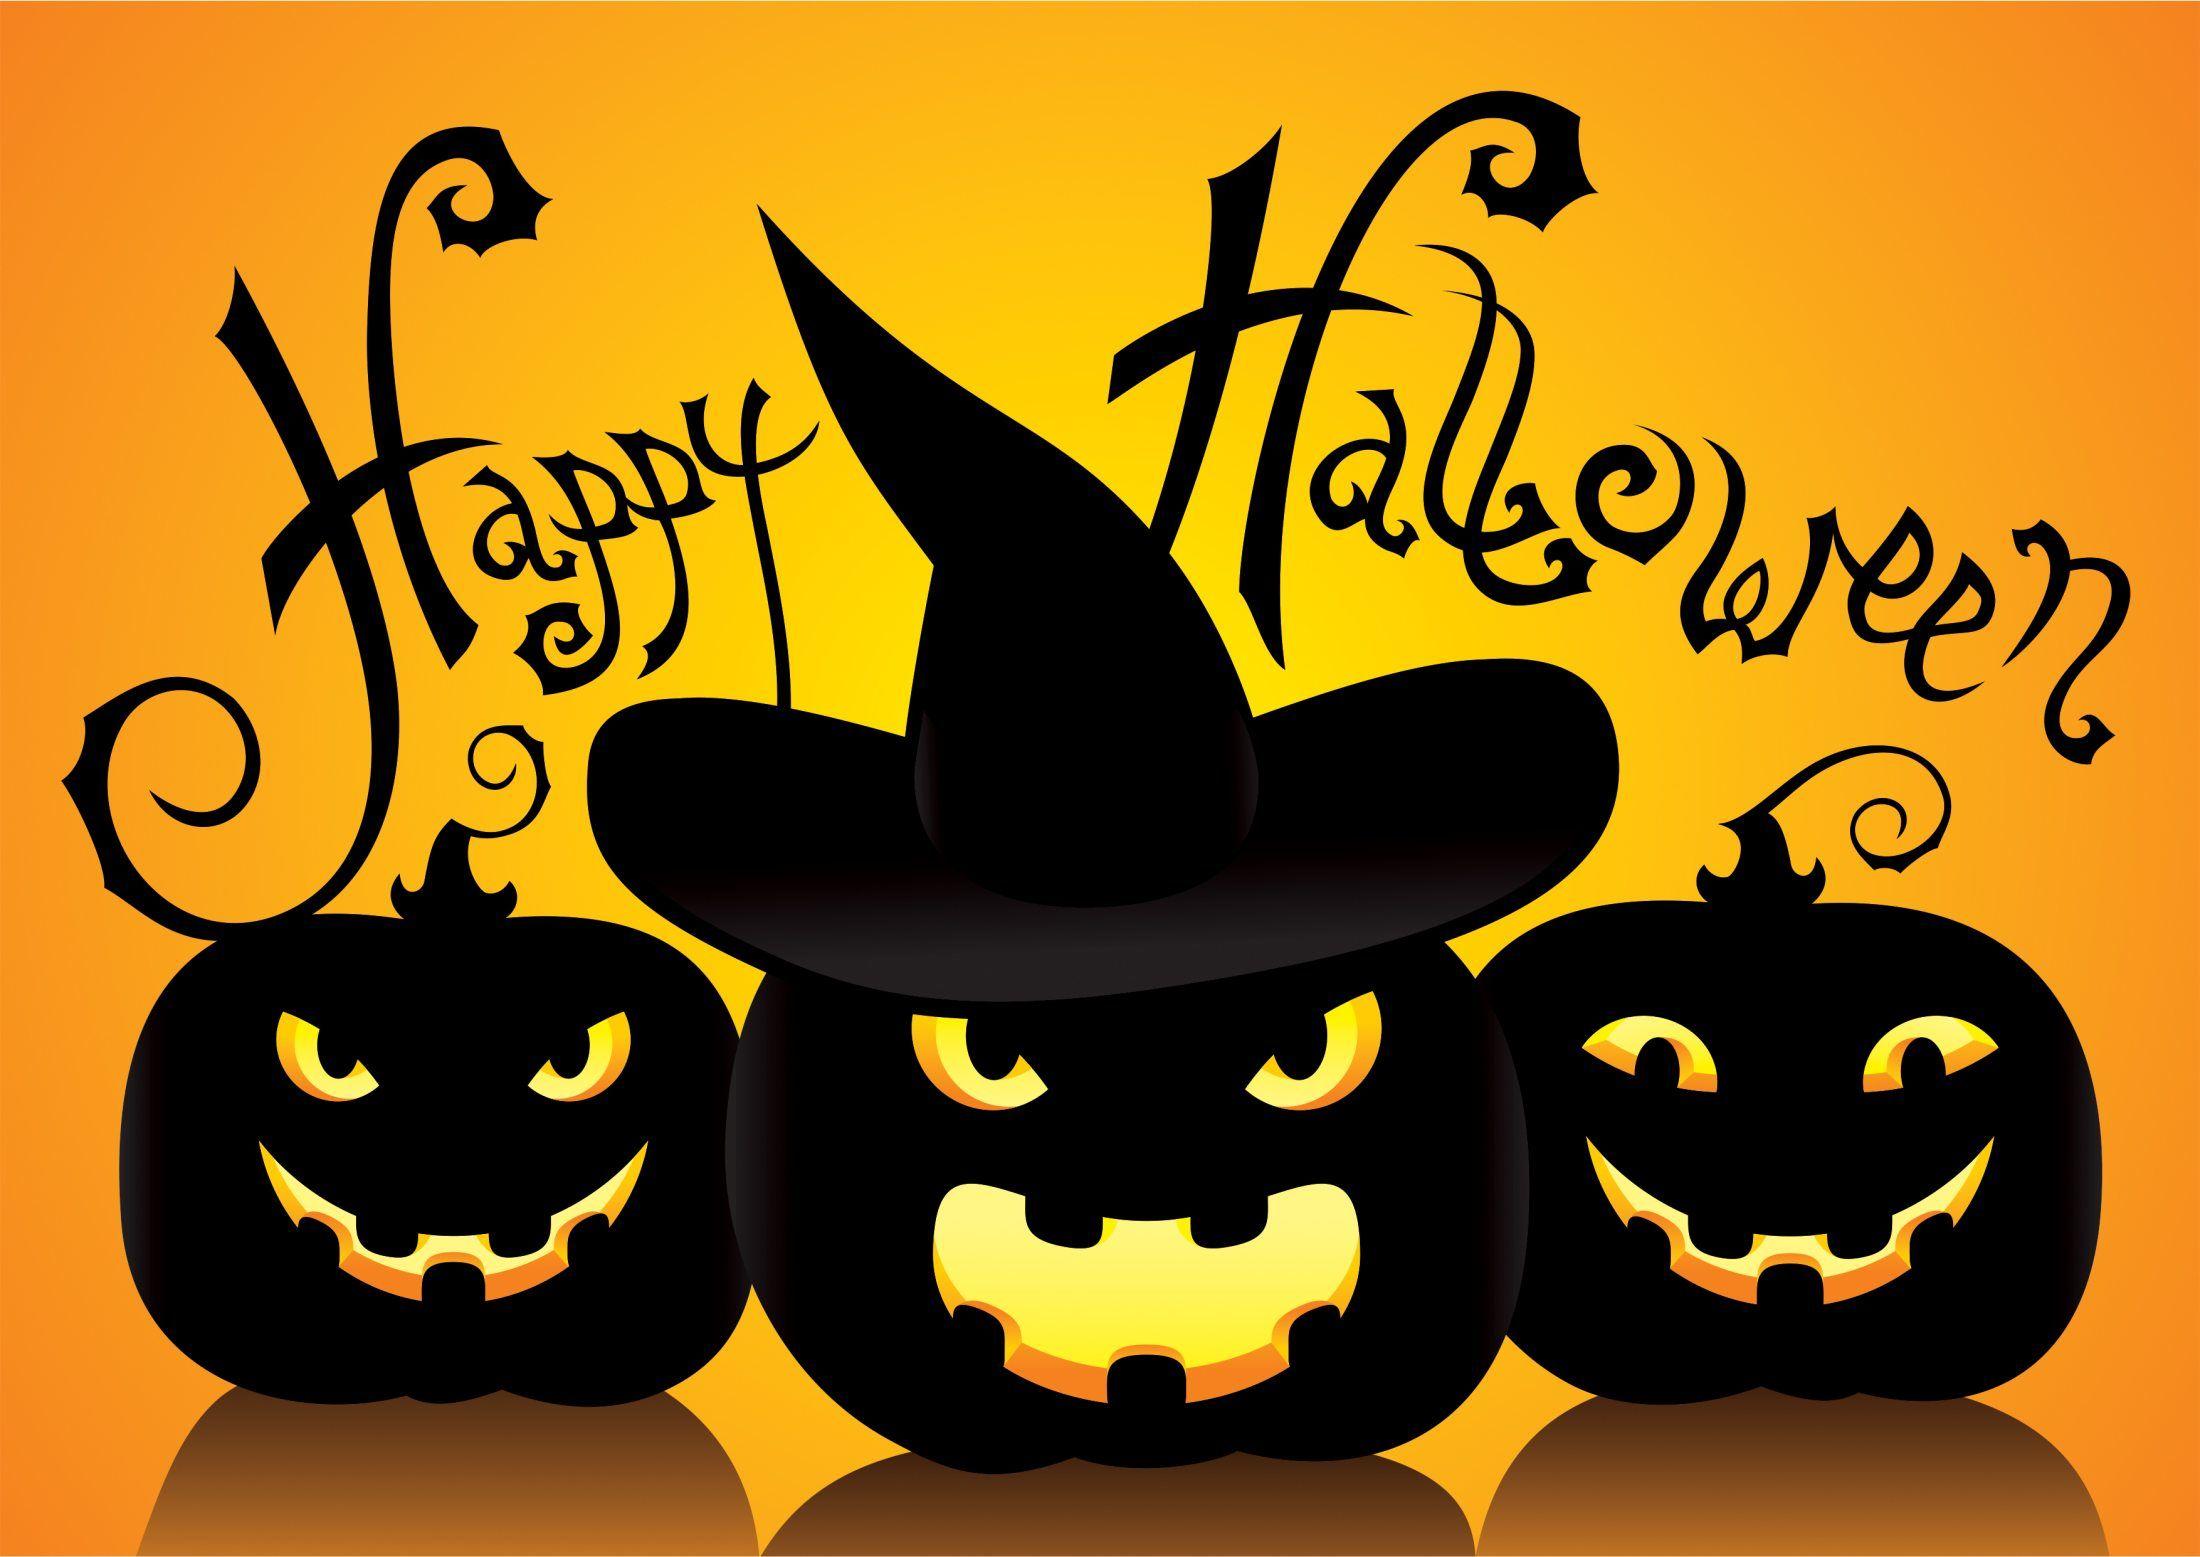 Happy Halloween HD Wallpaper. Download Free HD Wallpaper